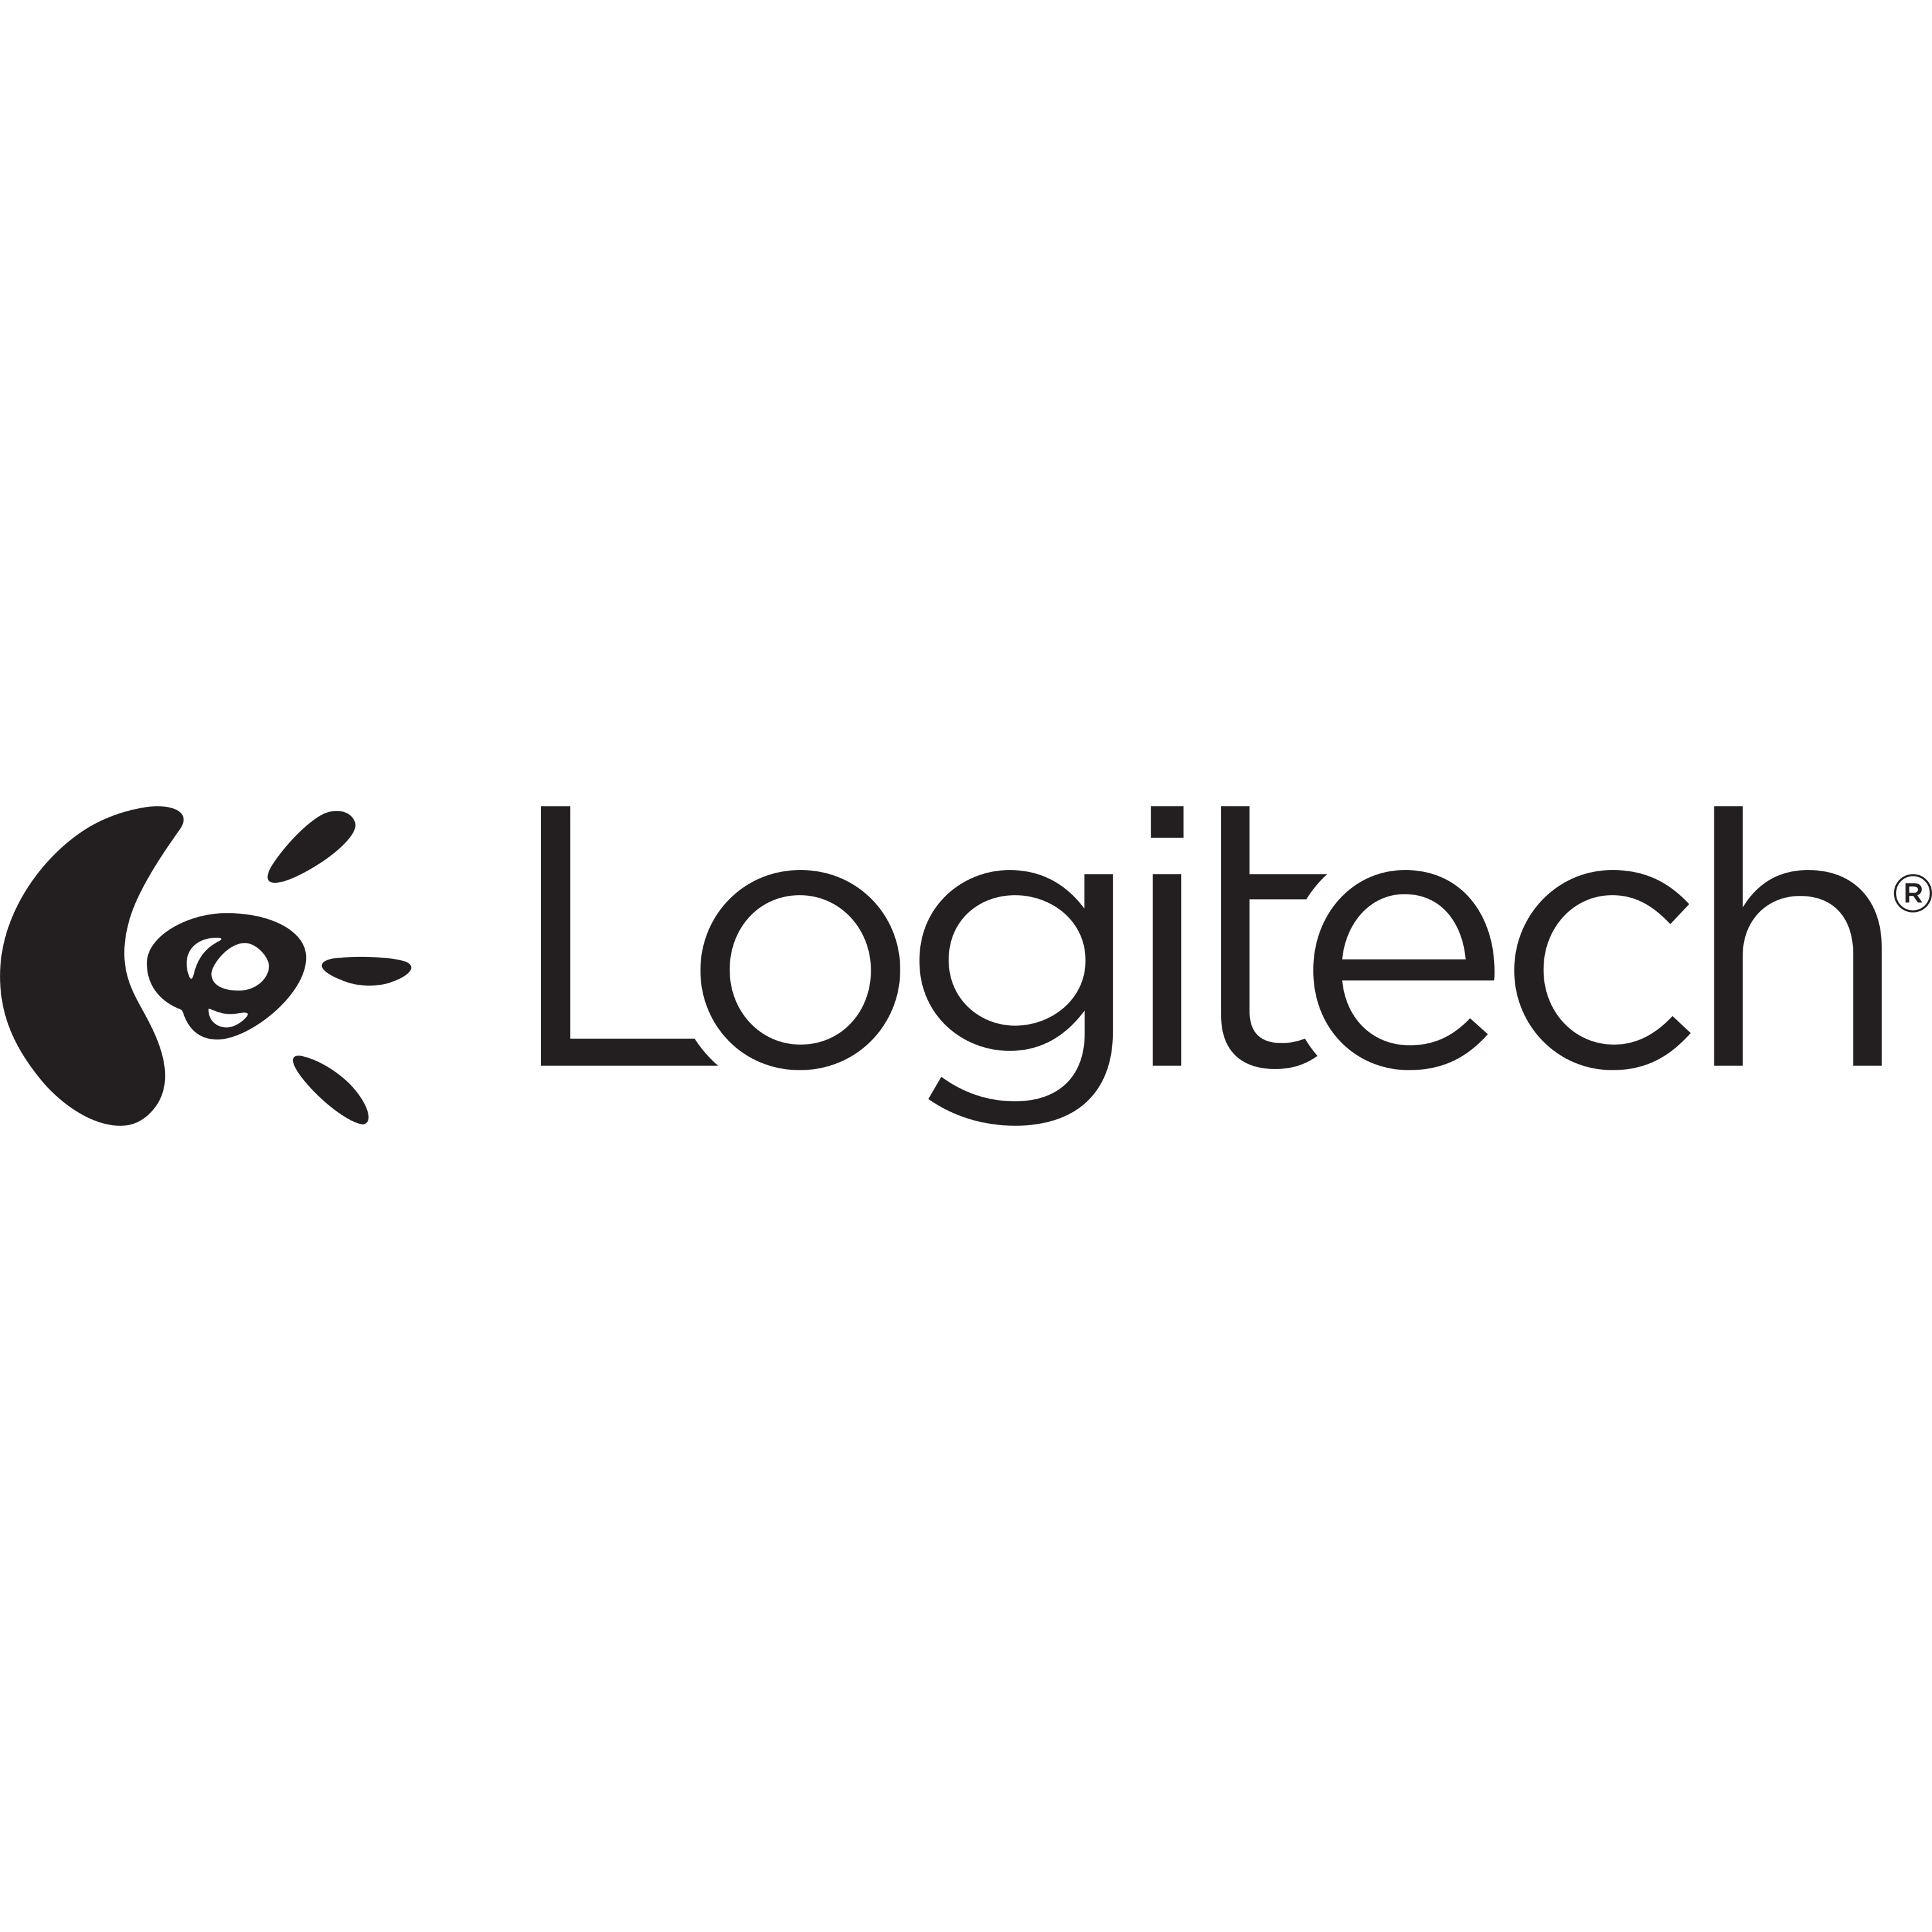 Logitech 2013 Logo Transparent Image